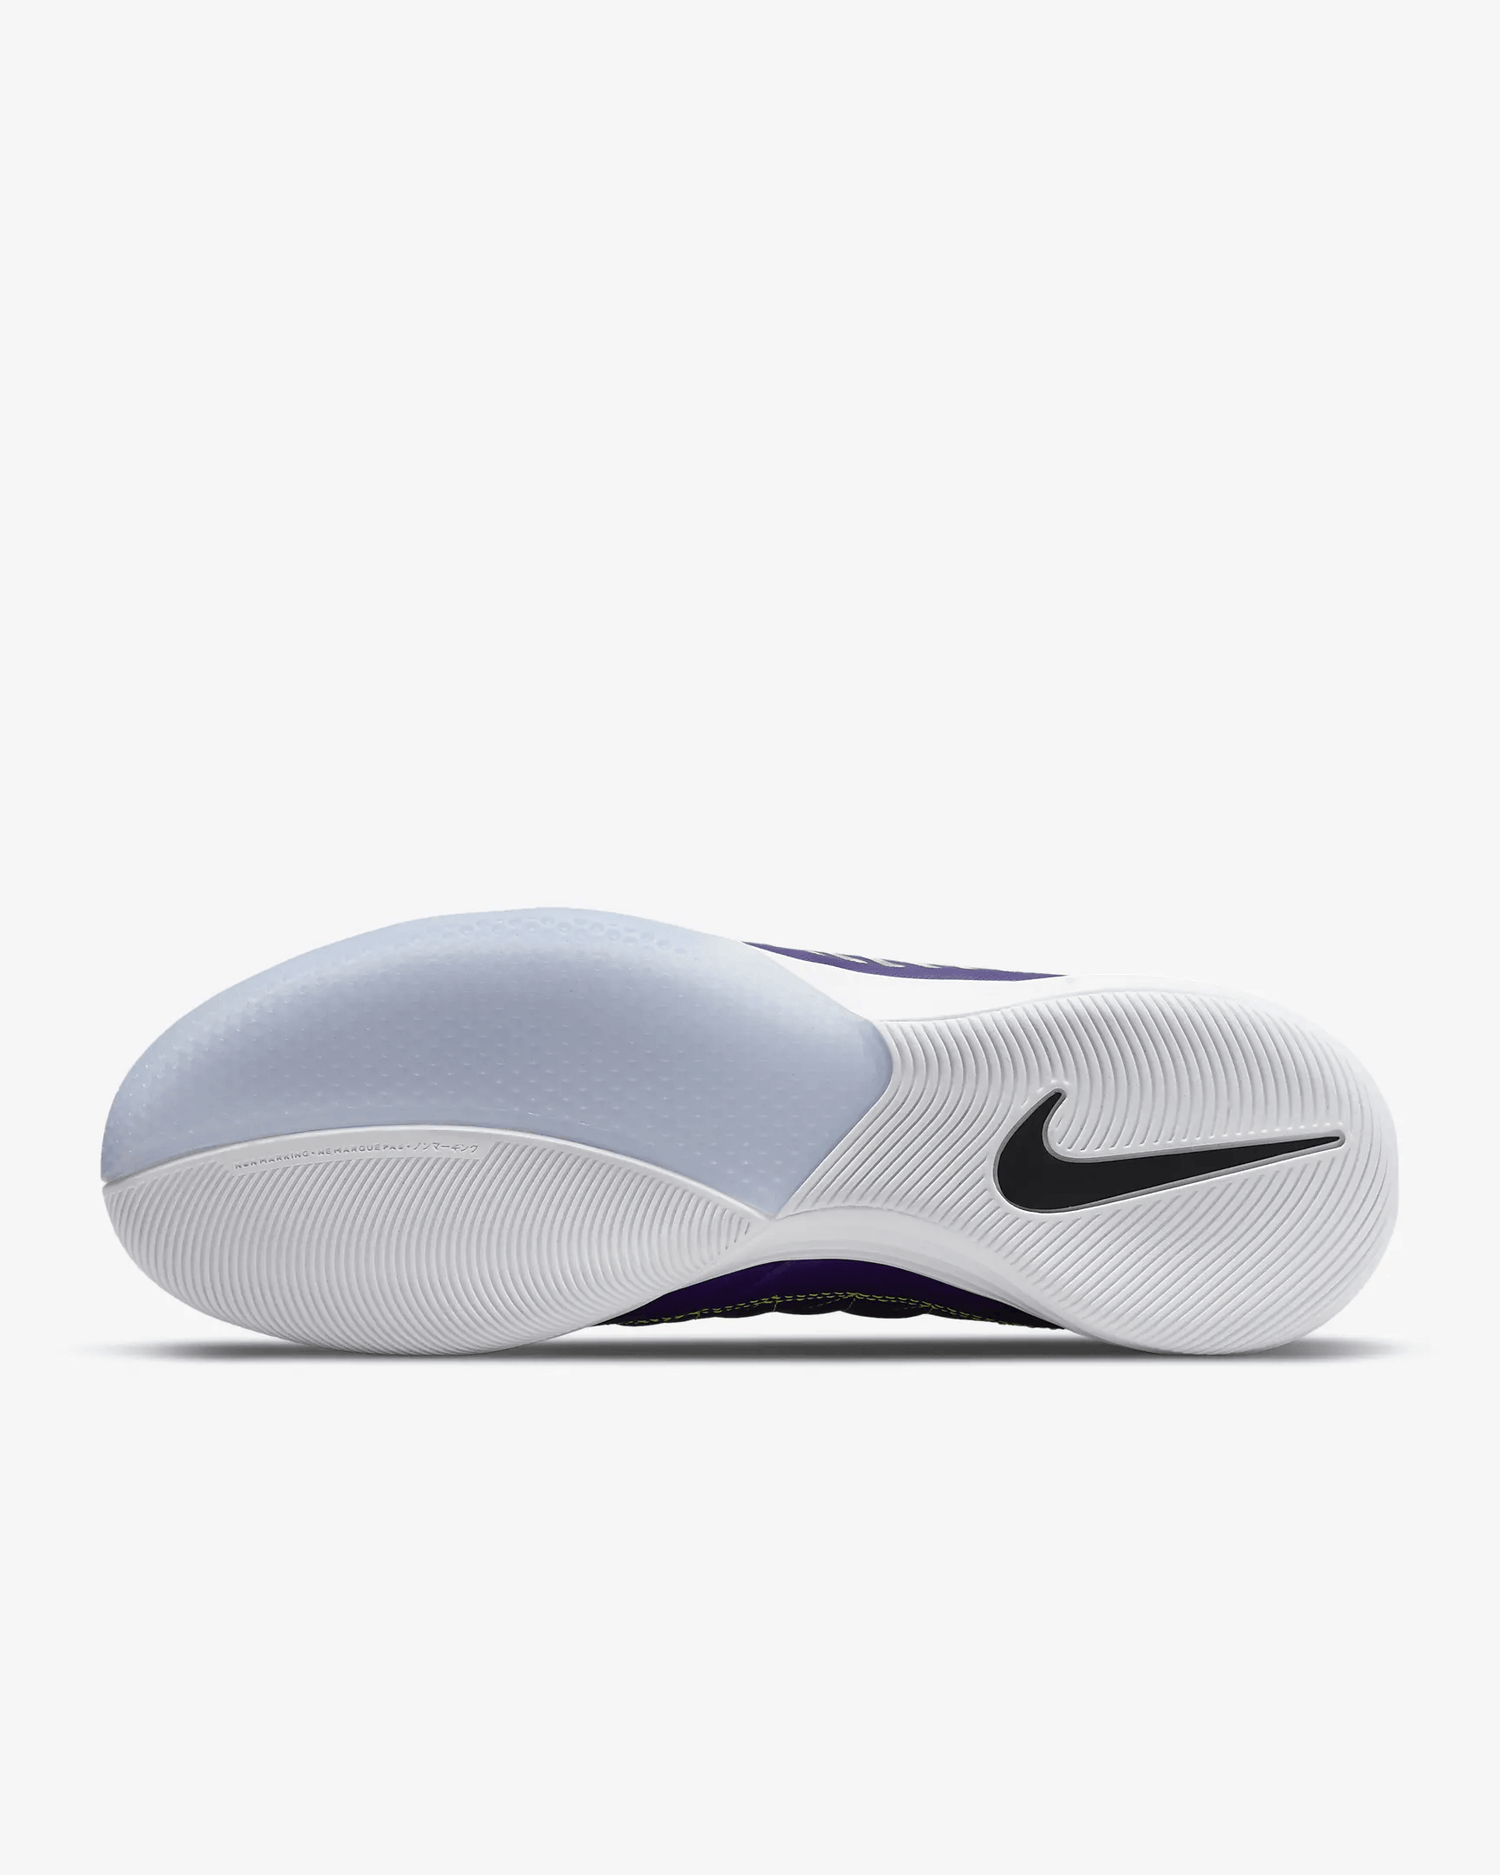 Nike Lunar Gato II Indoor - Purple-Volt (Bottom)